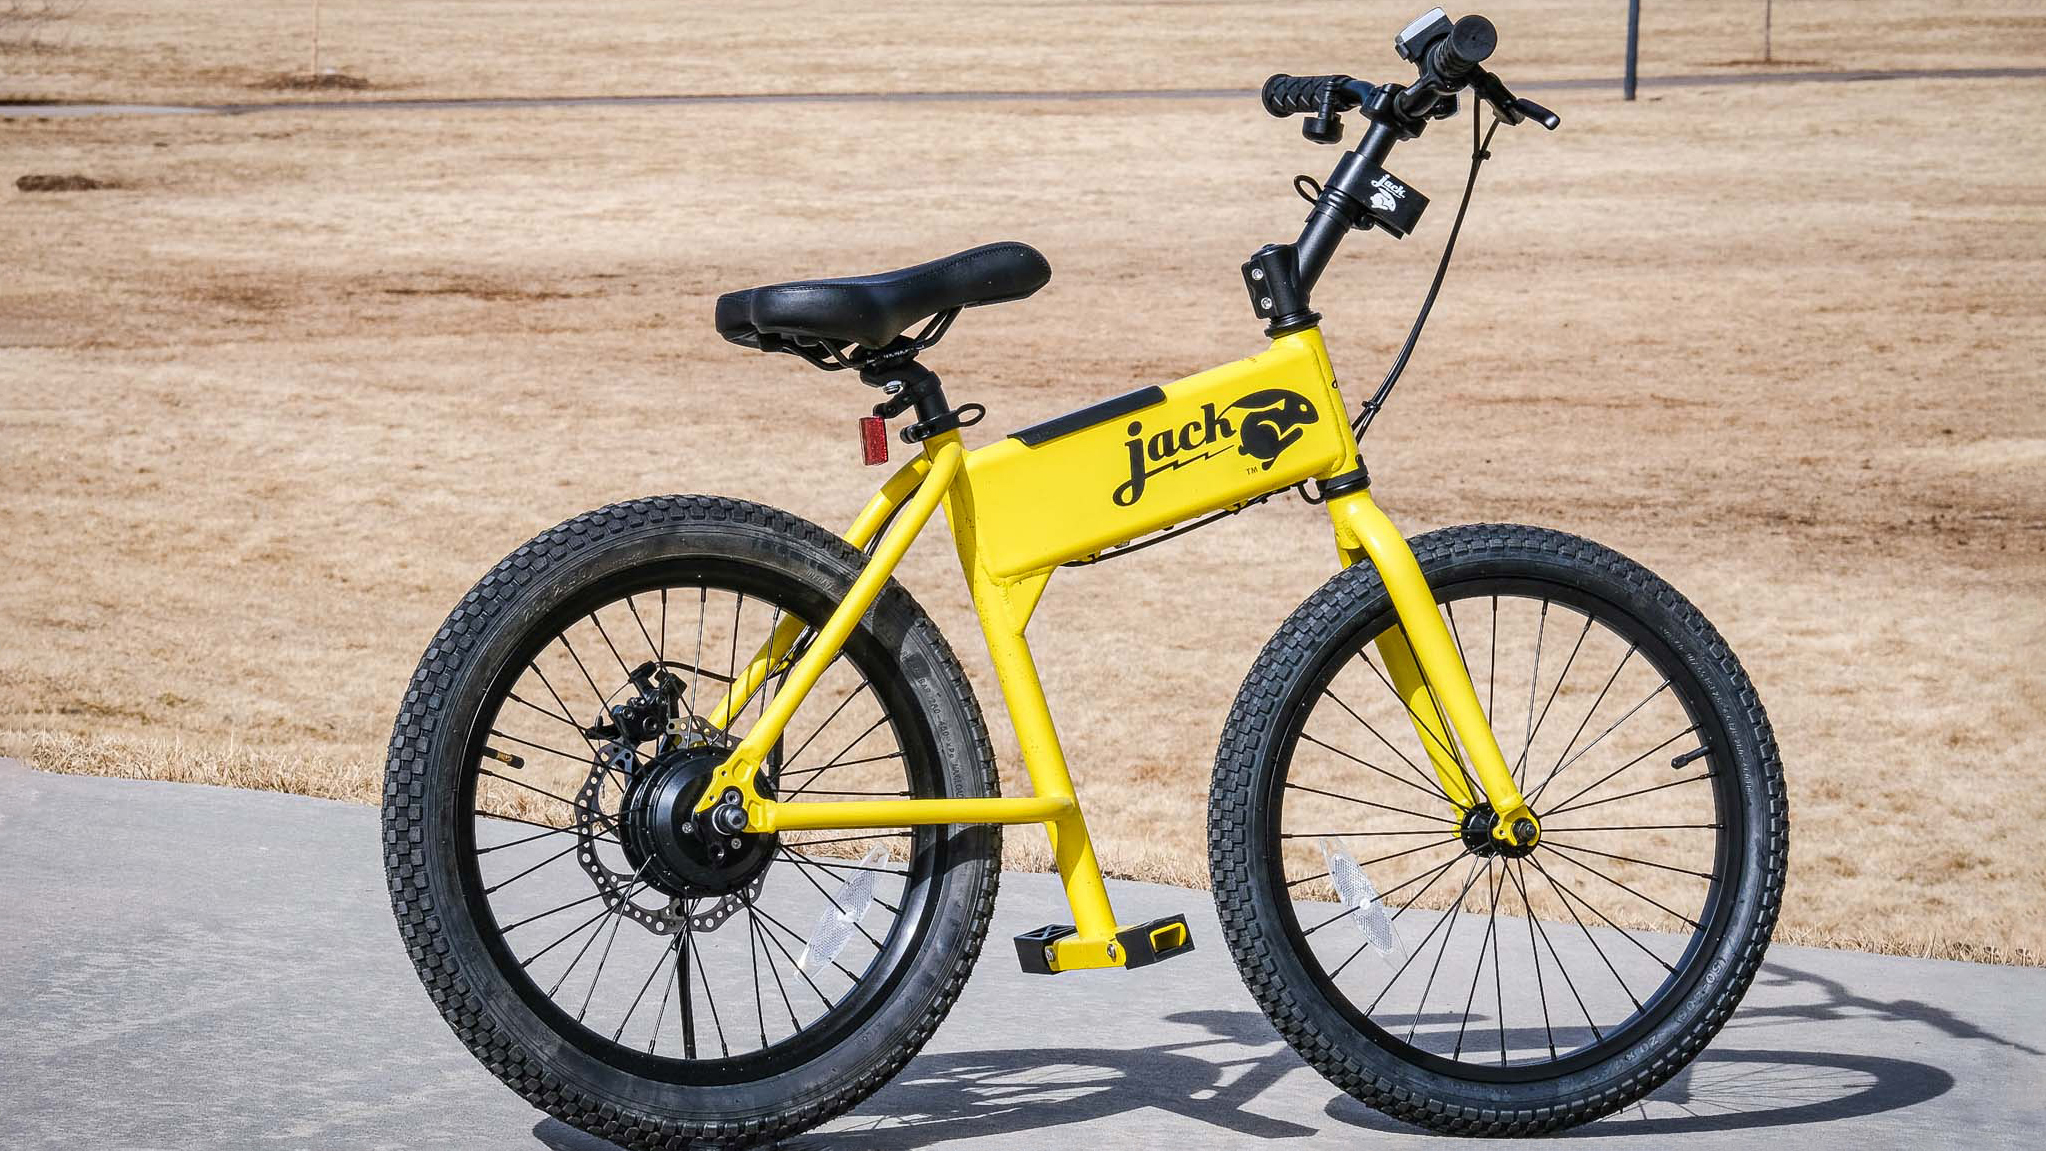 Jackrabbit e-bike review | Tom's Guide